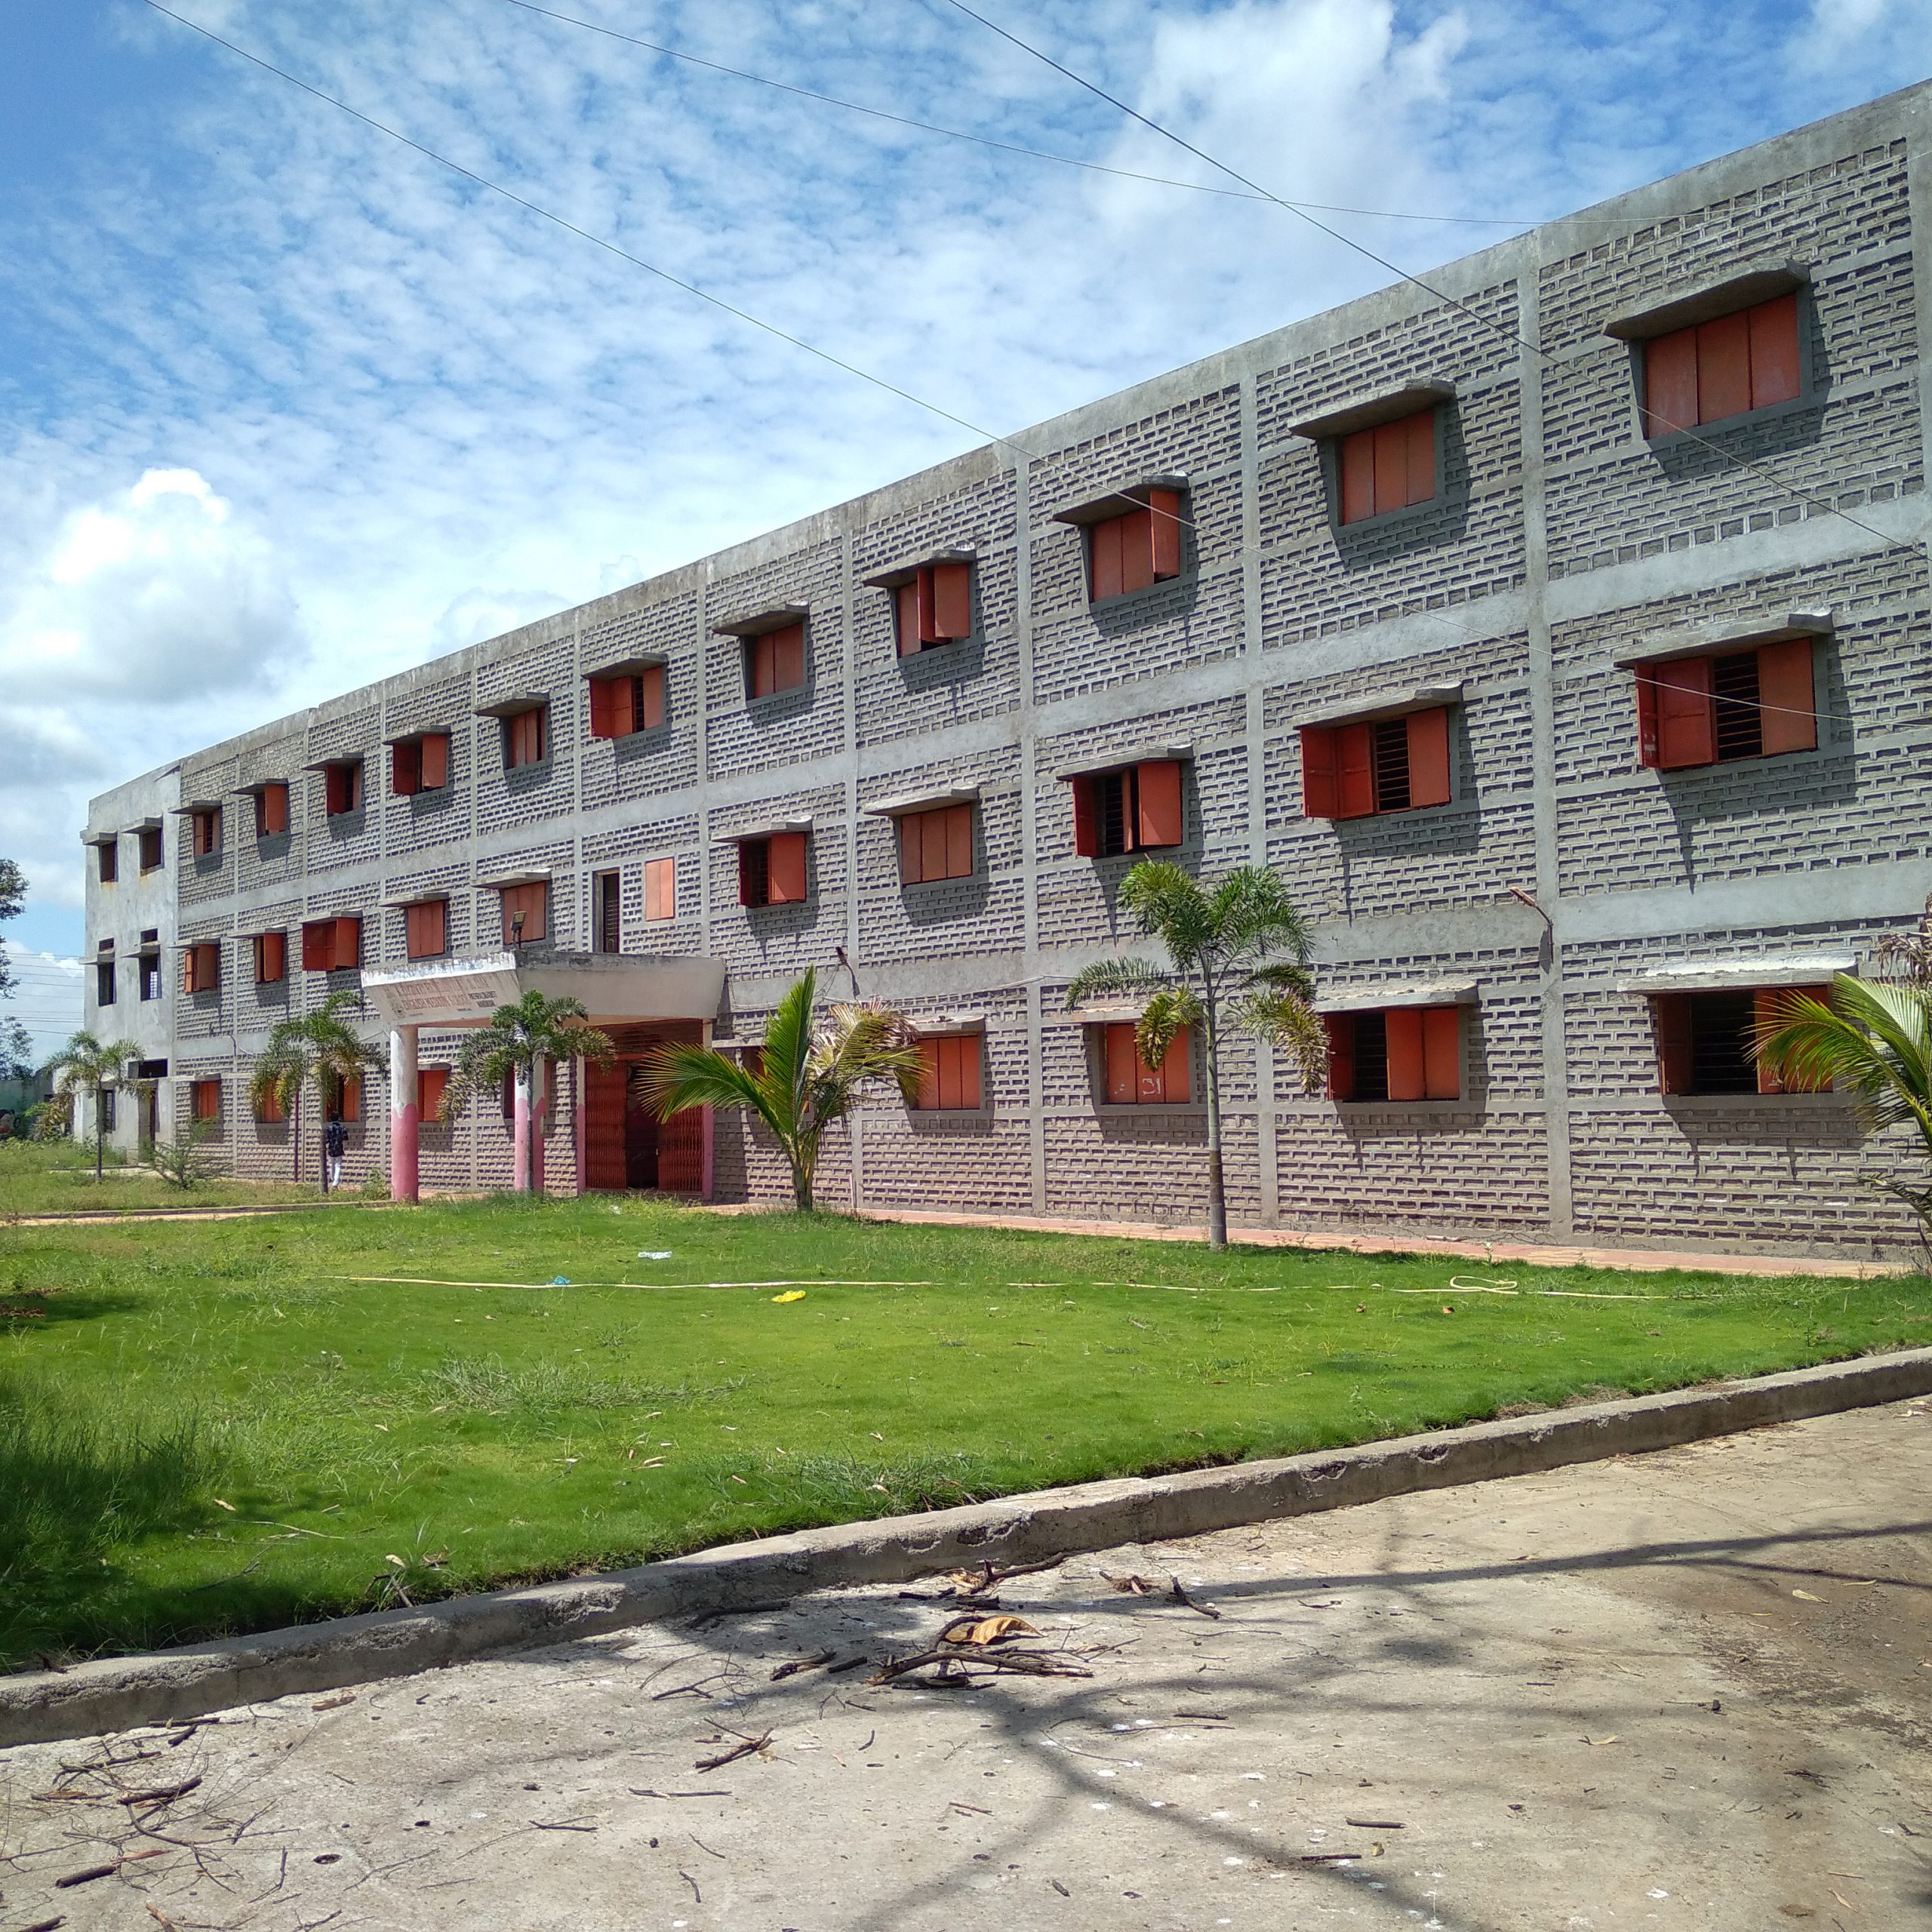 hostel building images